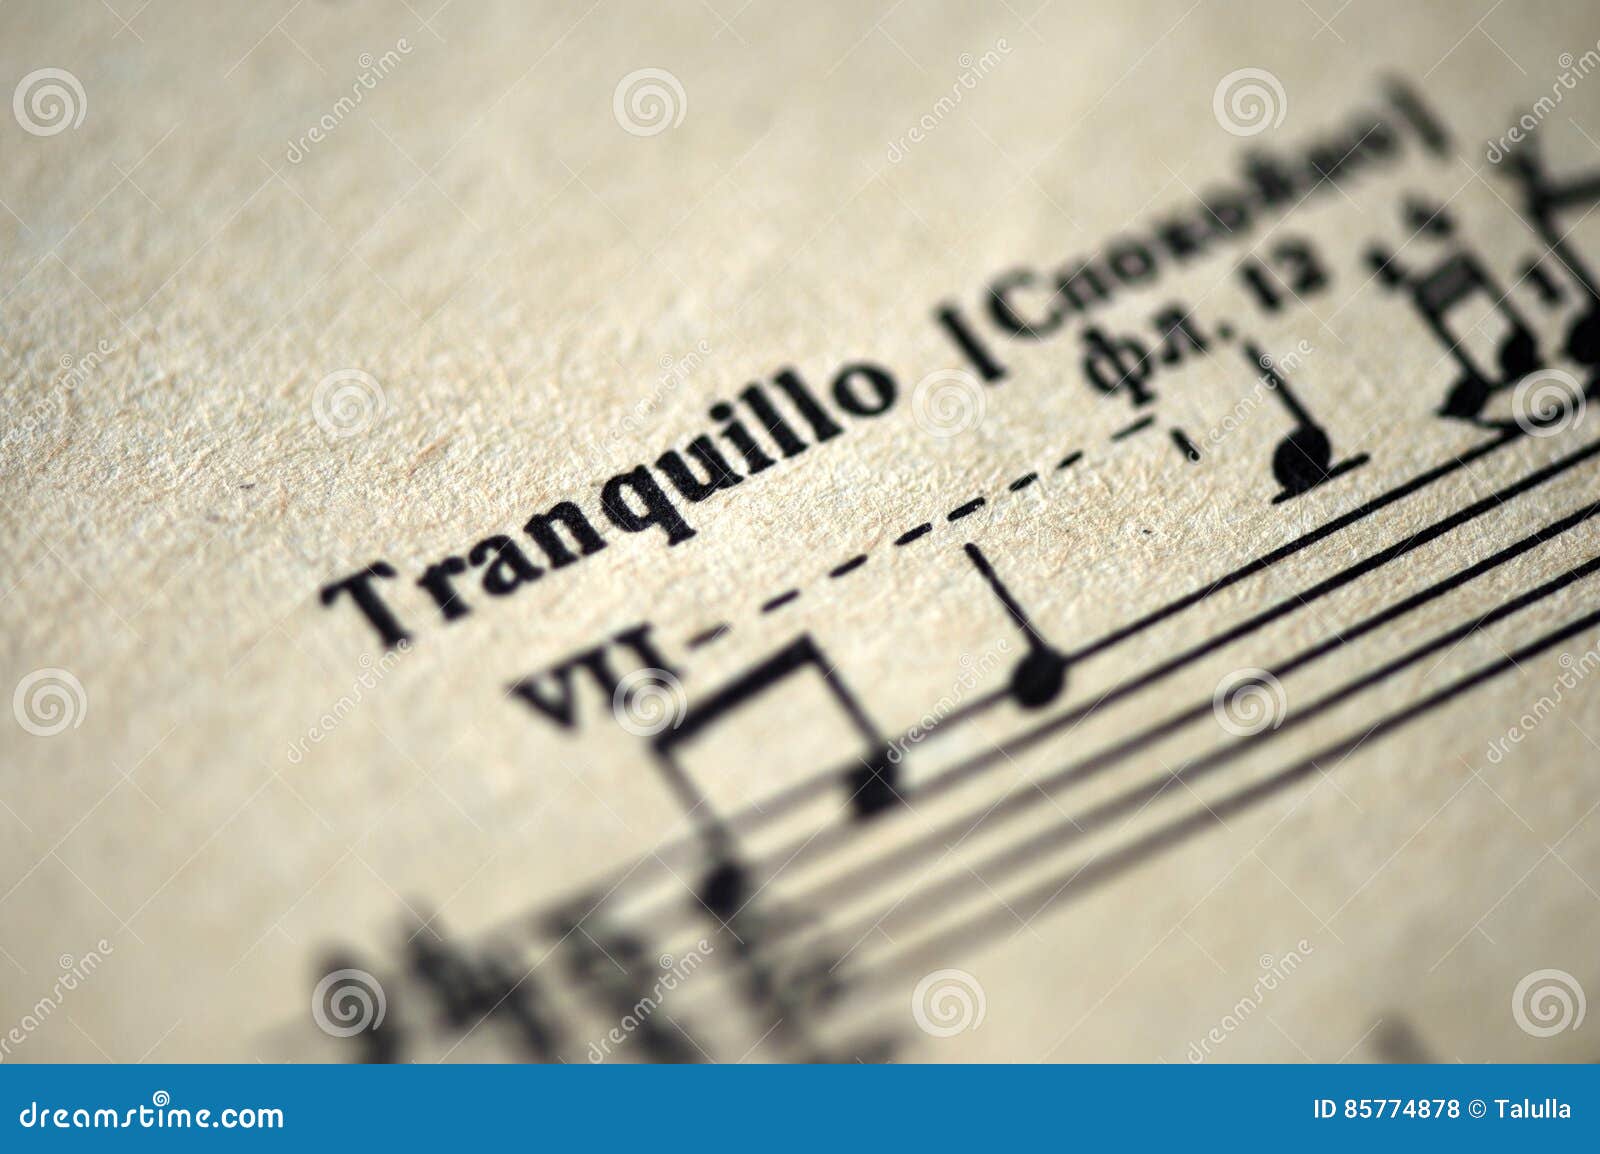 musical tempo `tranquillo` in a music book